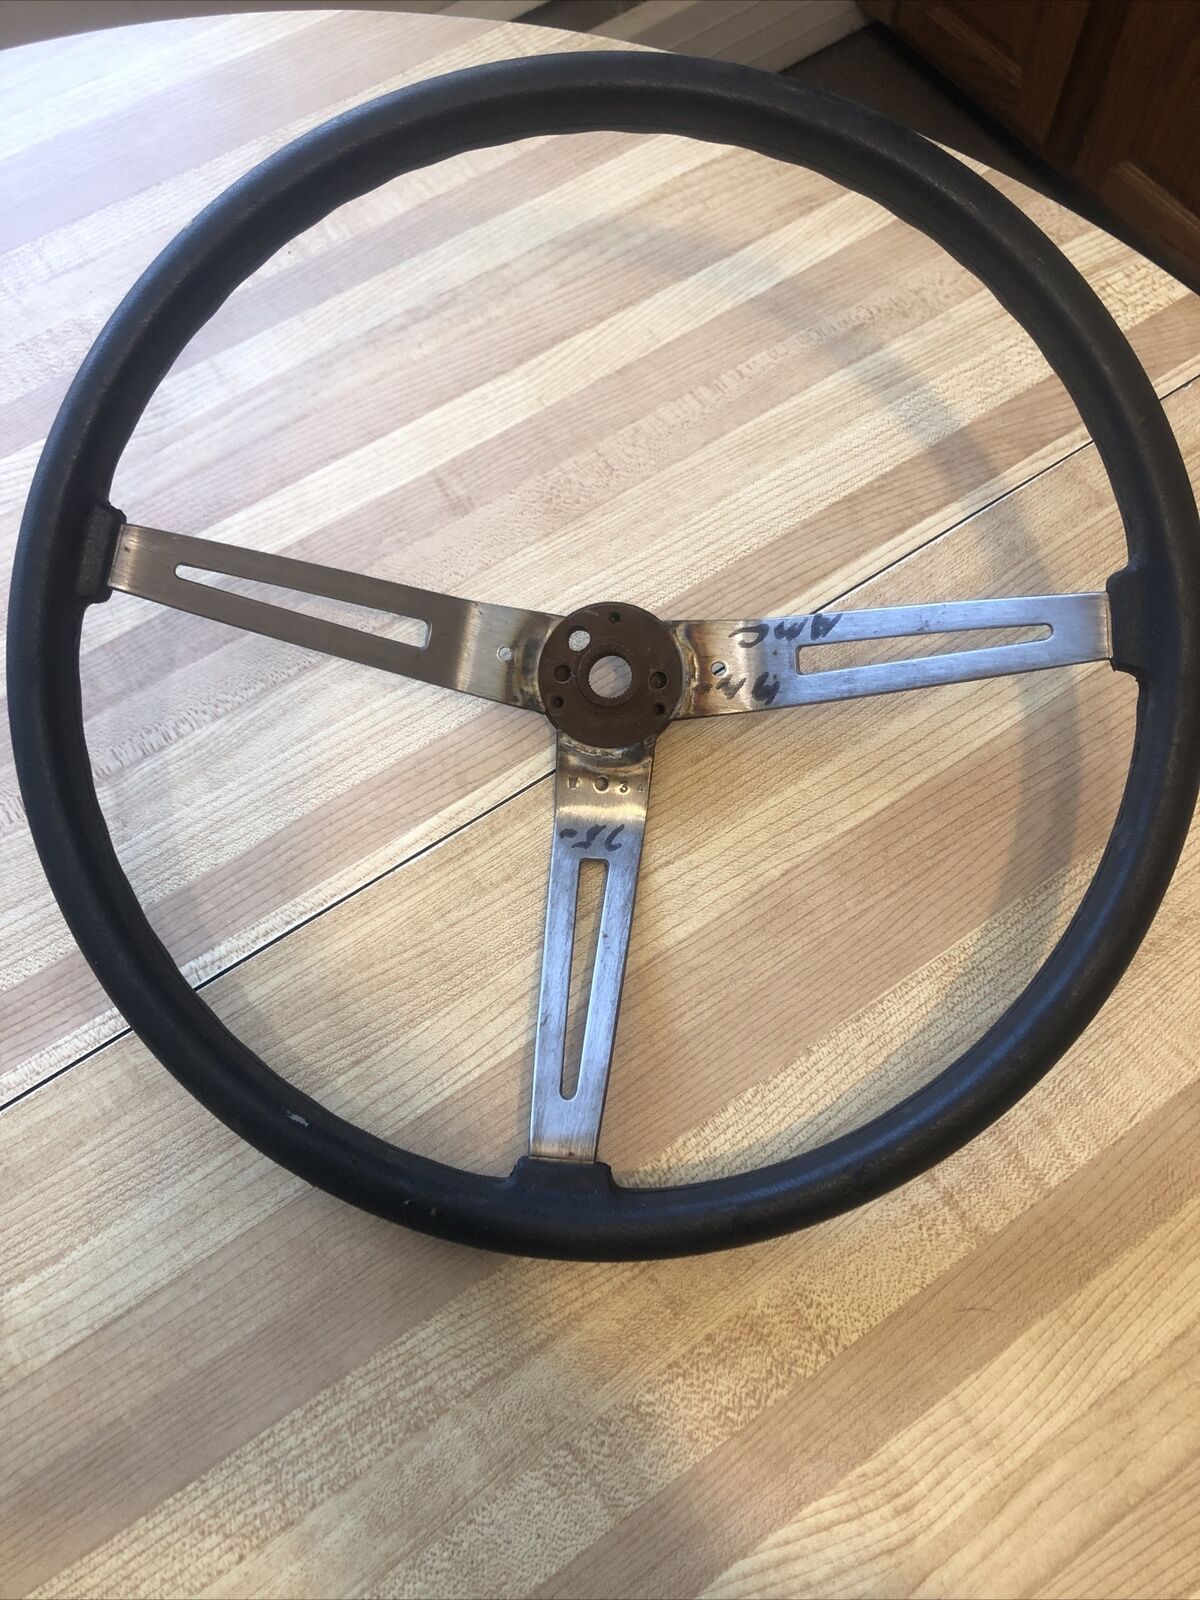 amc gremlin amx ralley sport steering wheel